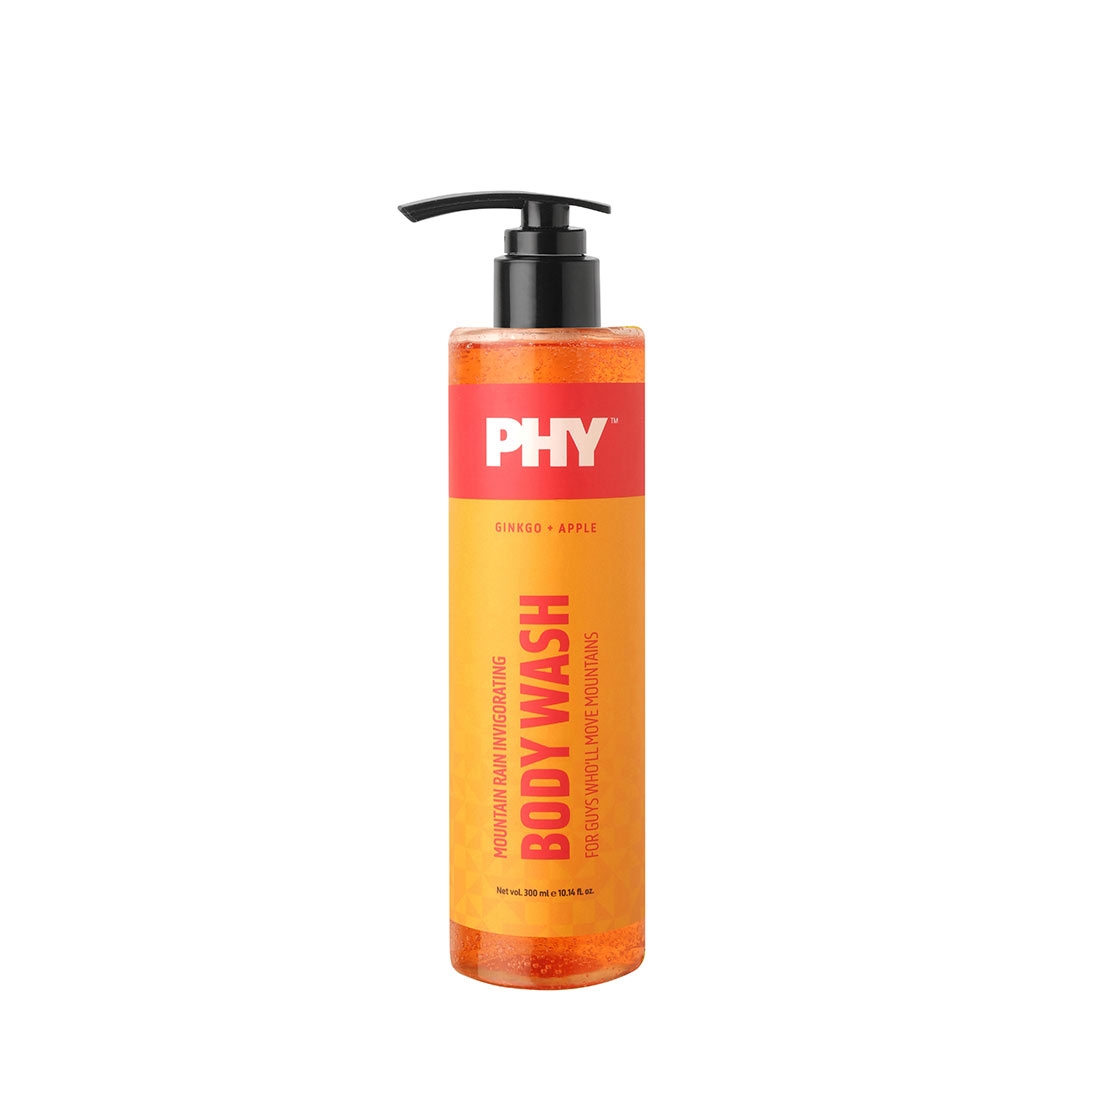 Phy | Phy Mountain Rain Invigorating Body Wash 